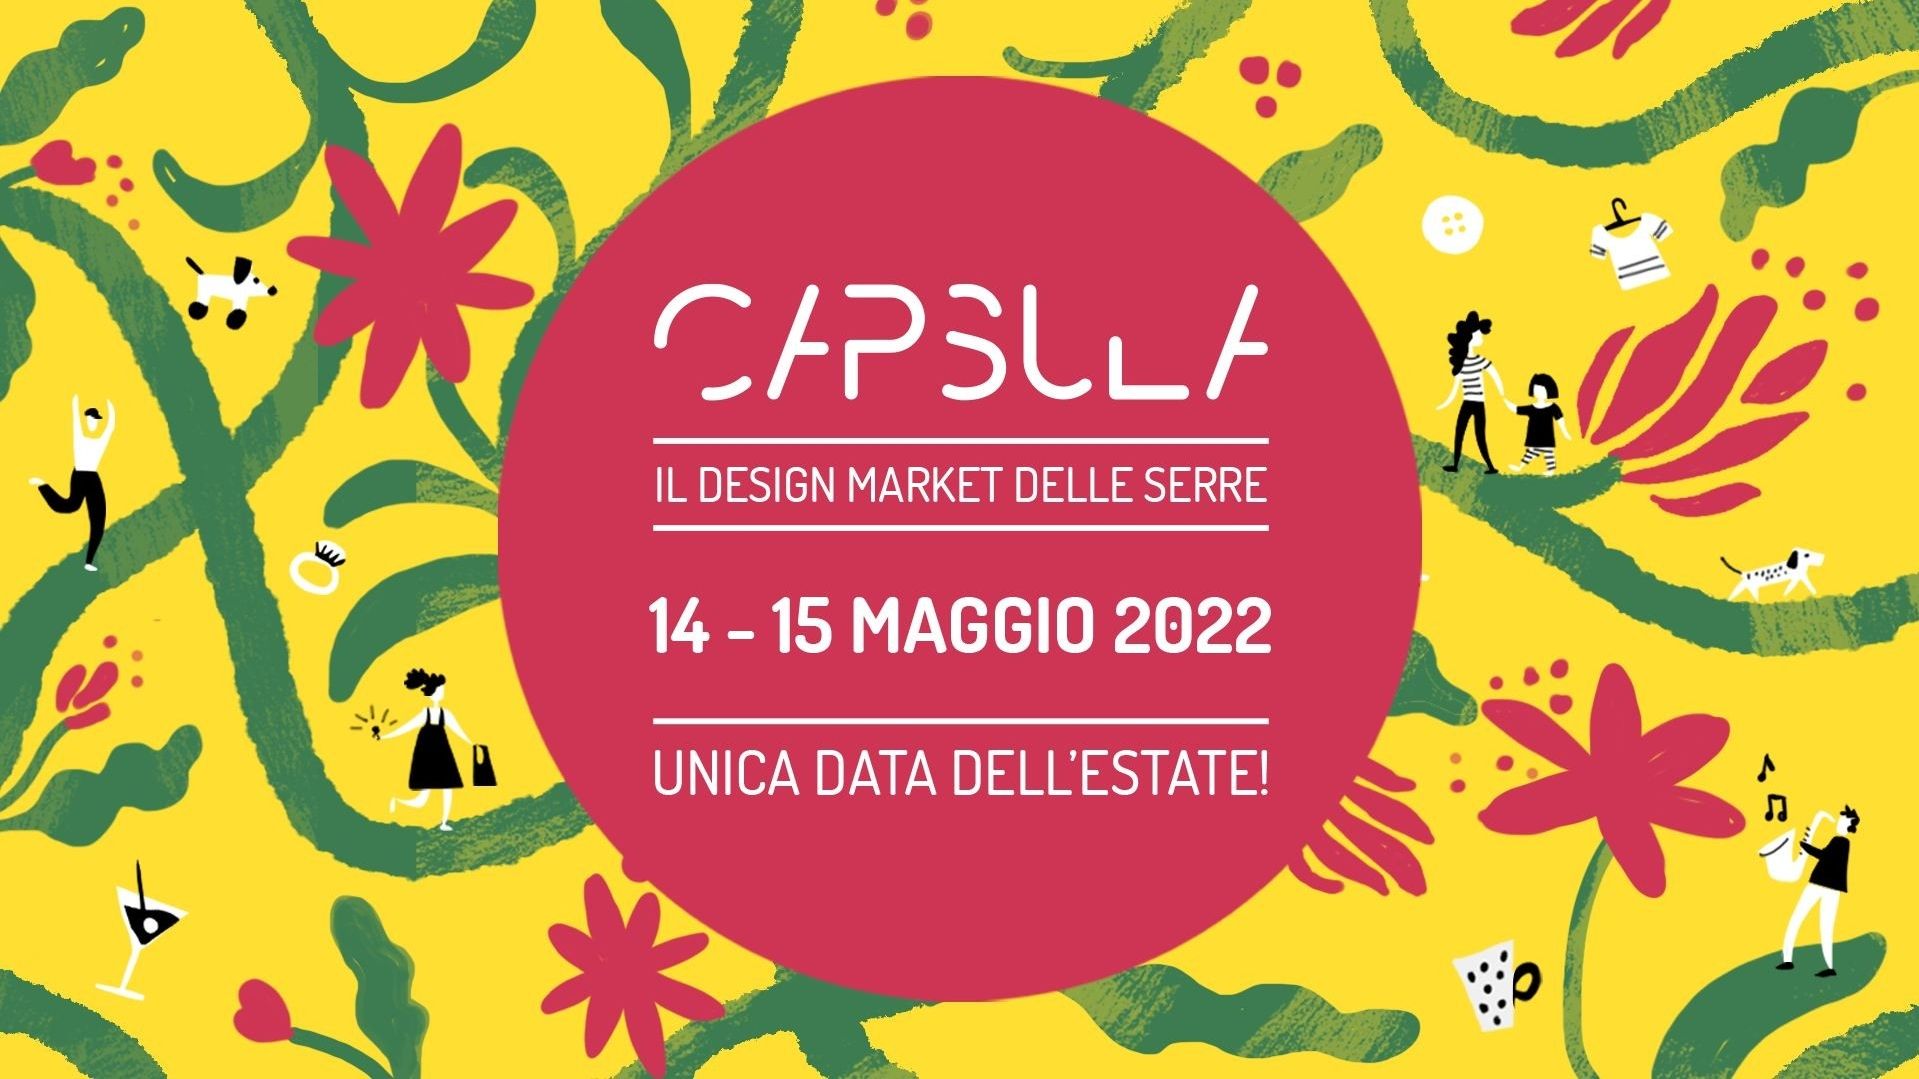 Capsula Design Market